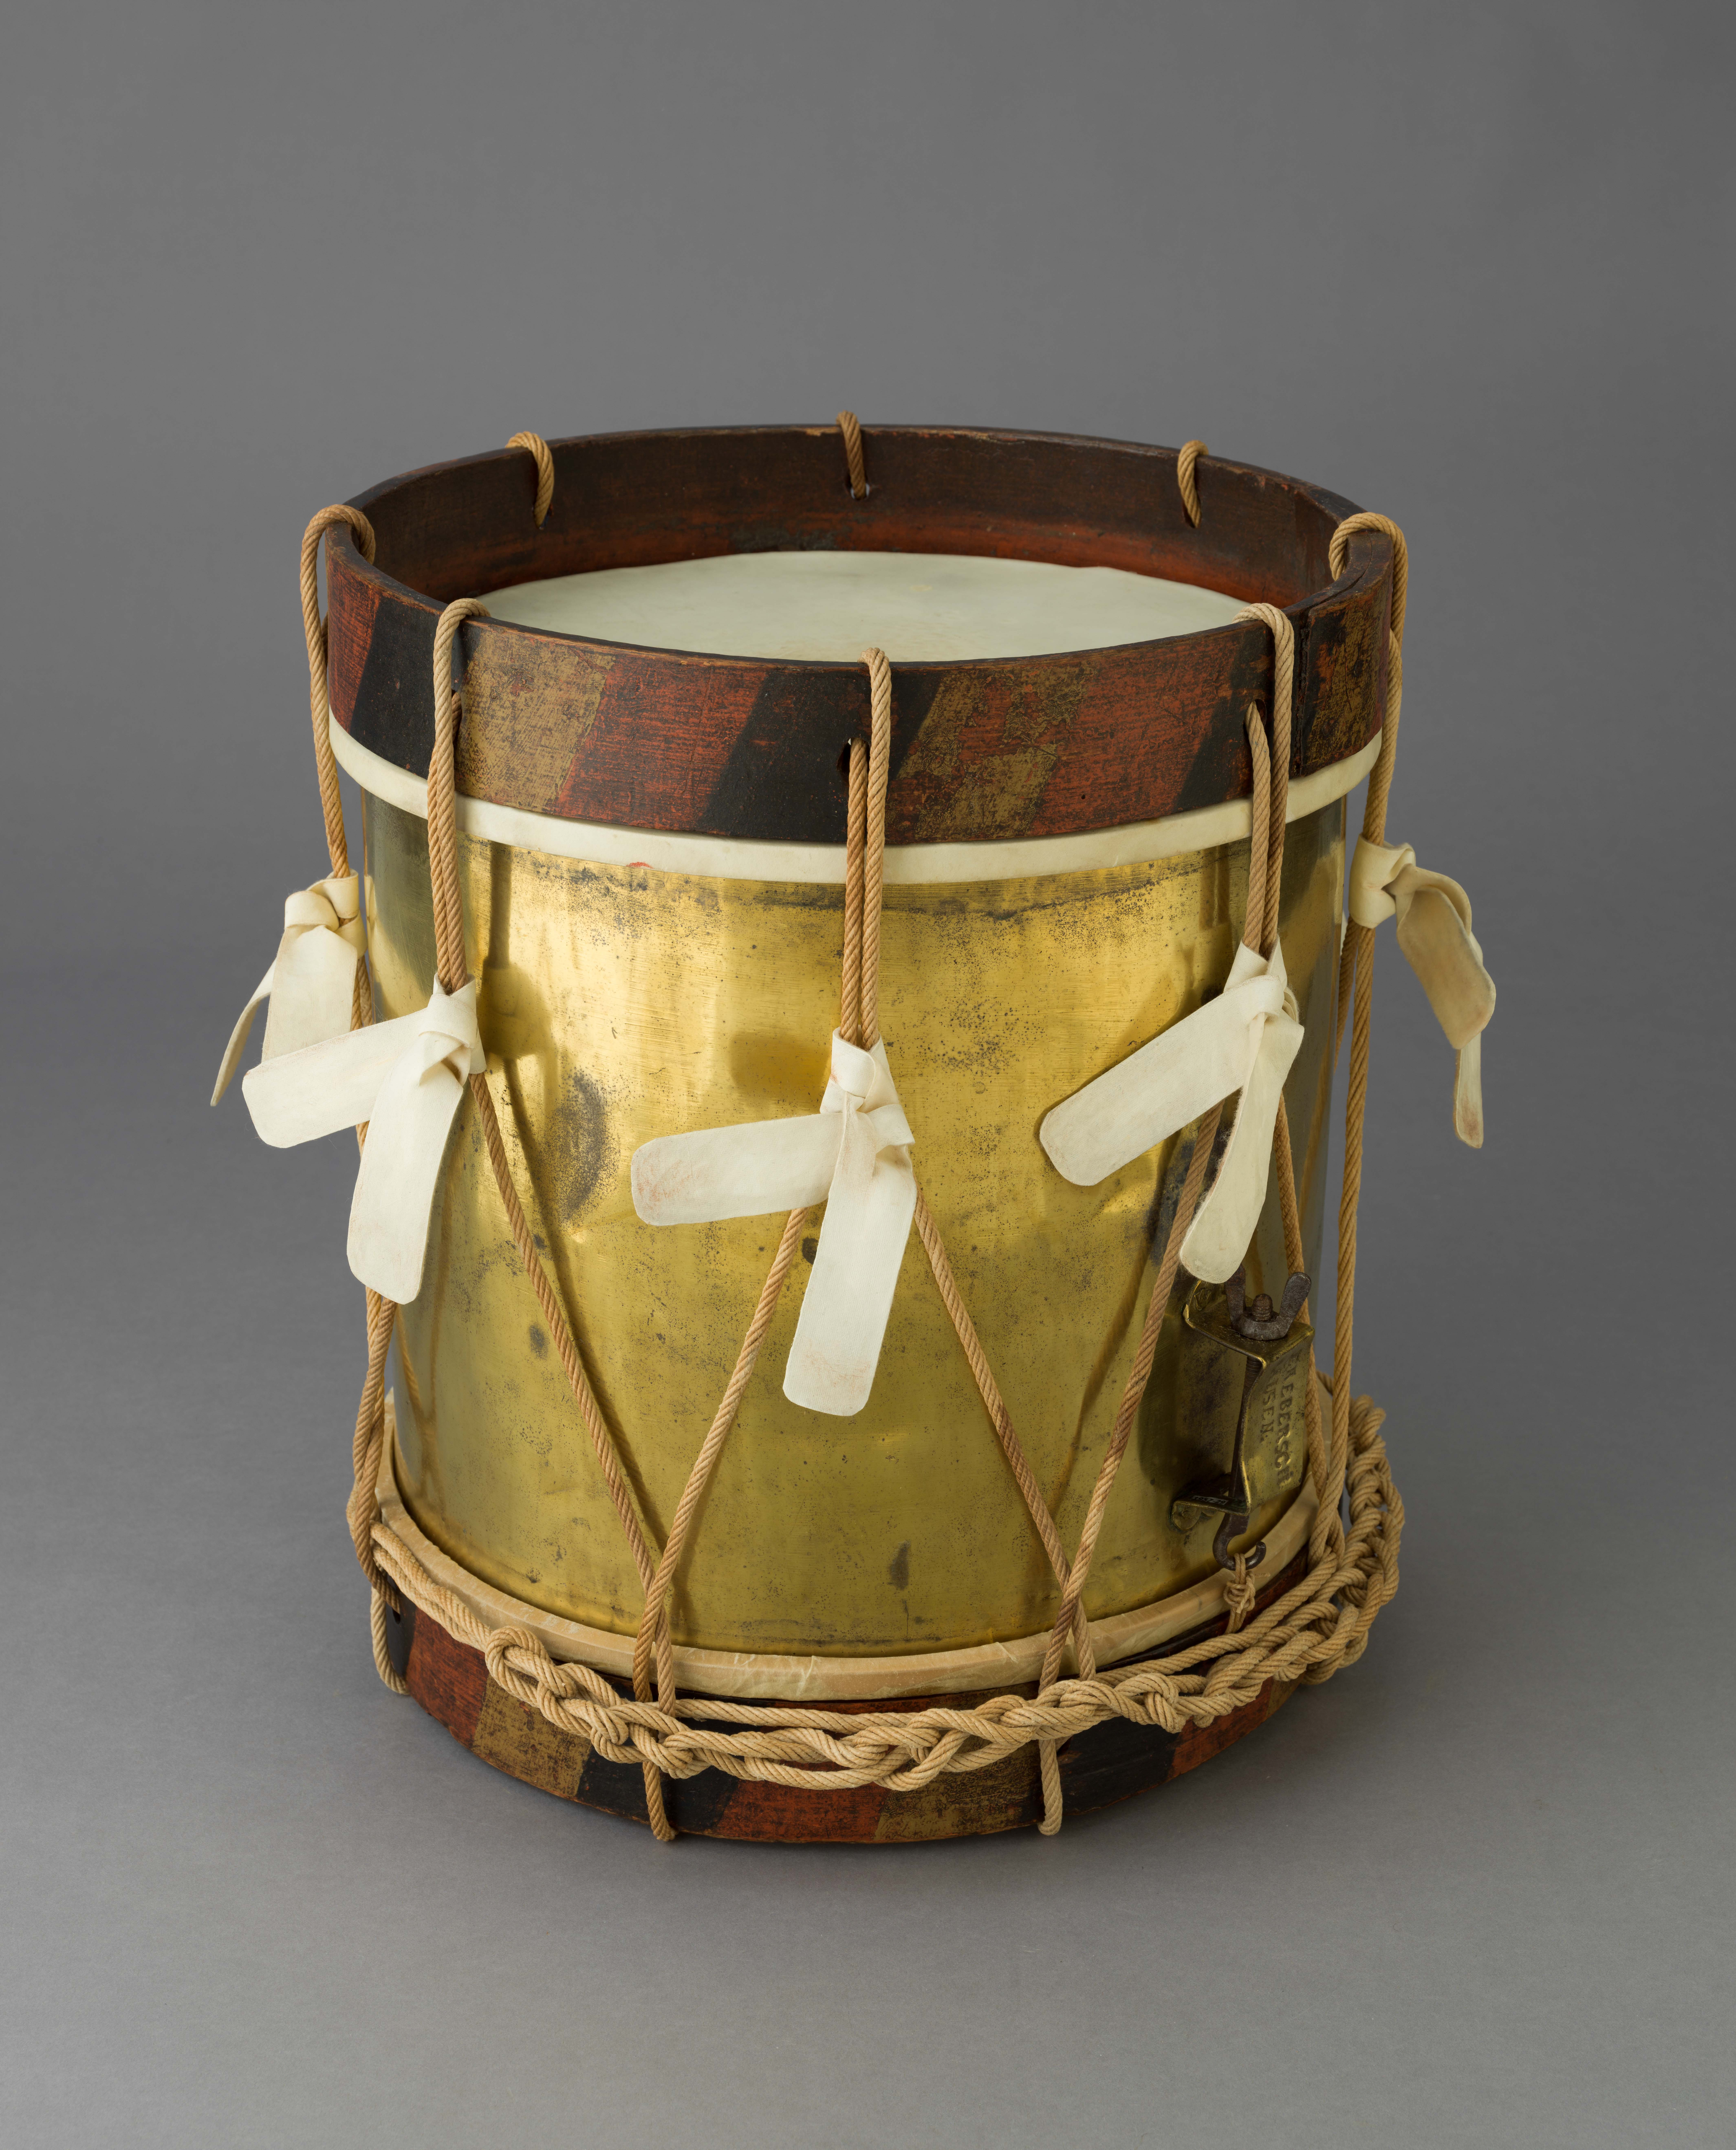 Side drum, Freberschausen, Waldeck region, Germany, circa 1770-1785. Wood, skin, copper alloy. Museum purchase, 1957-29 